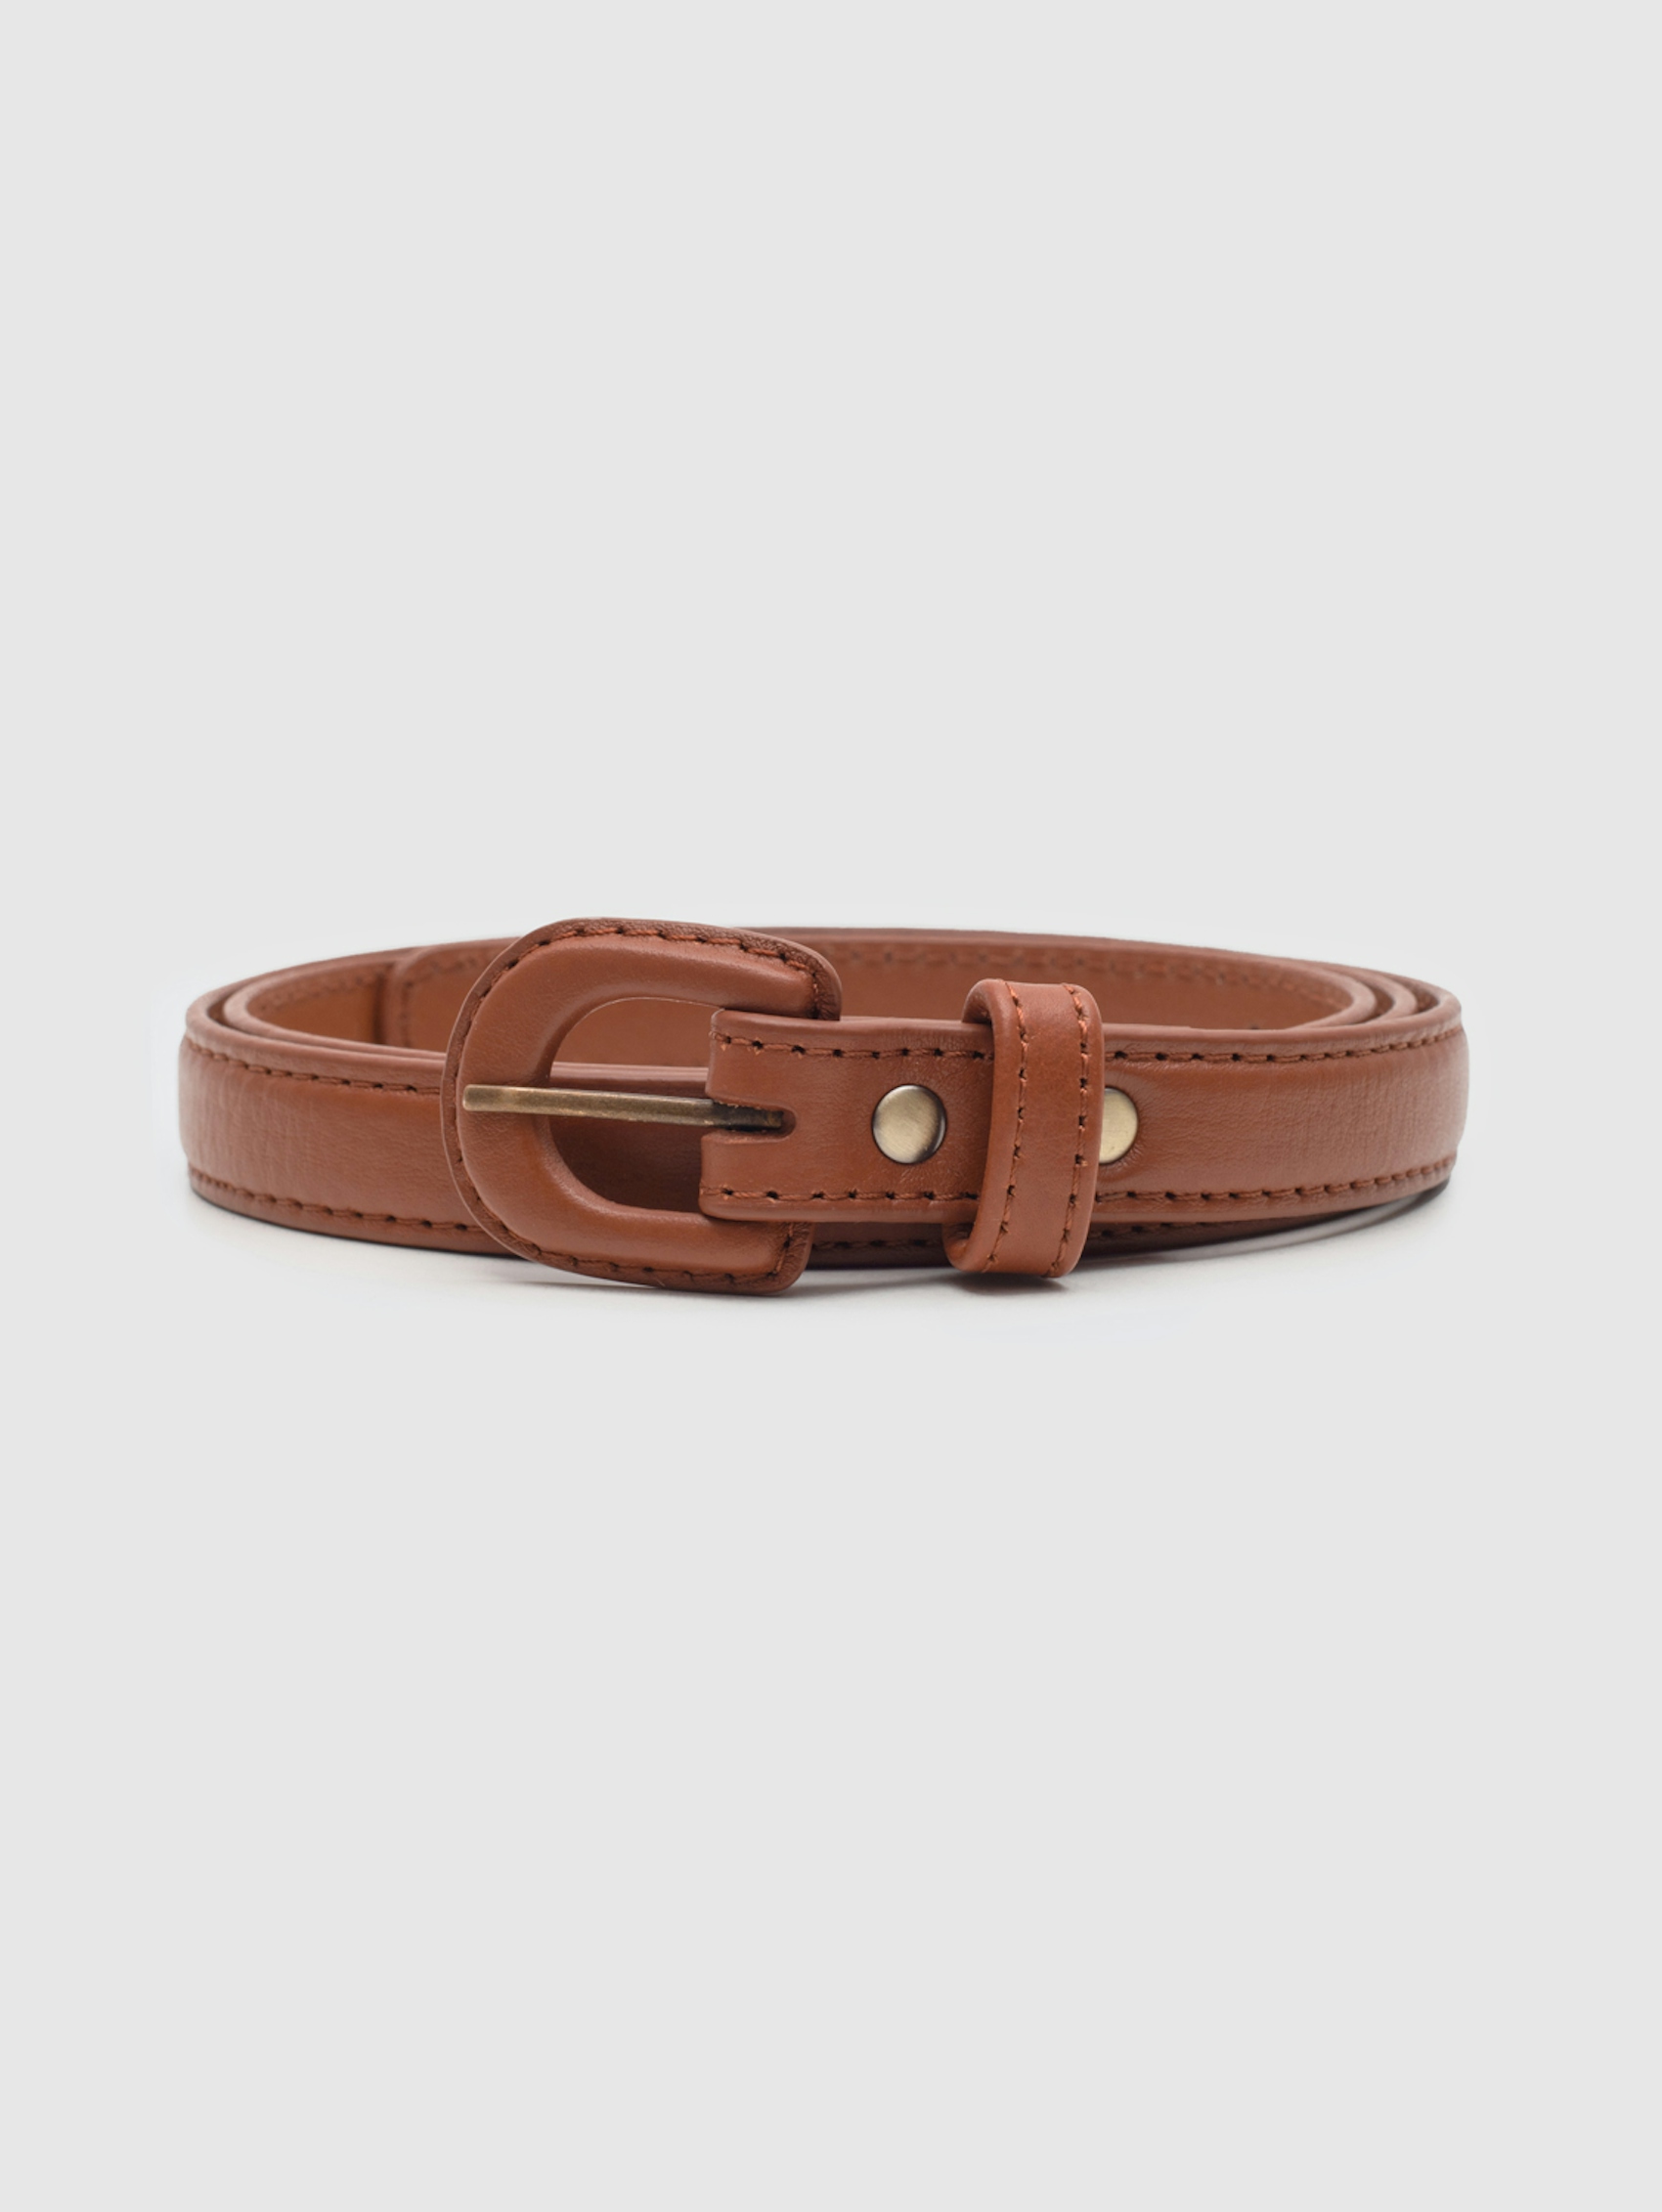 Coloured leather belt